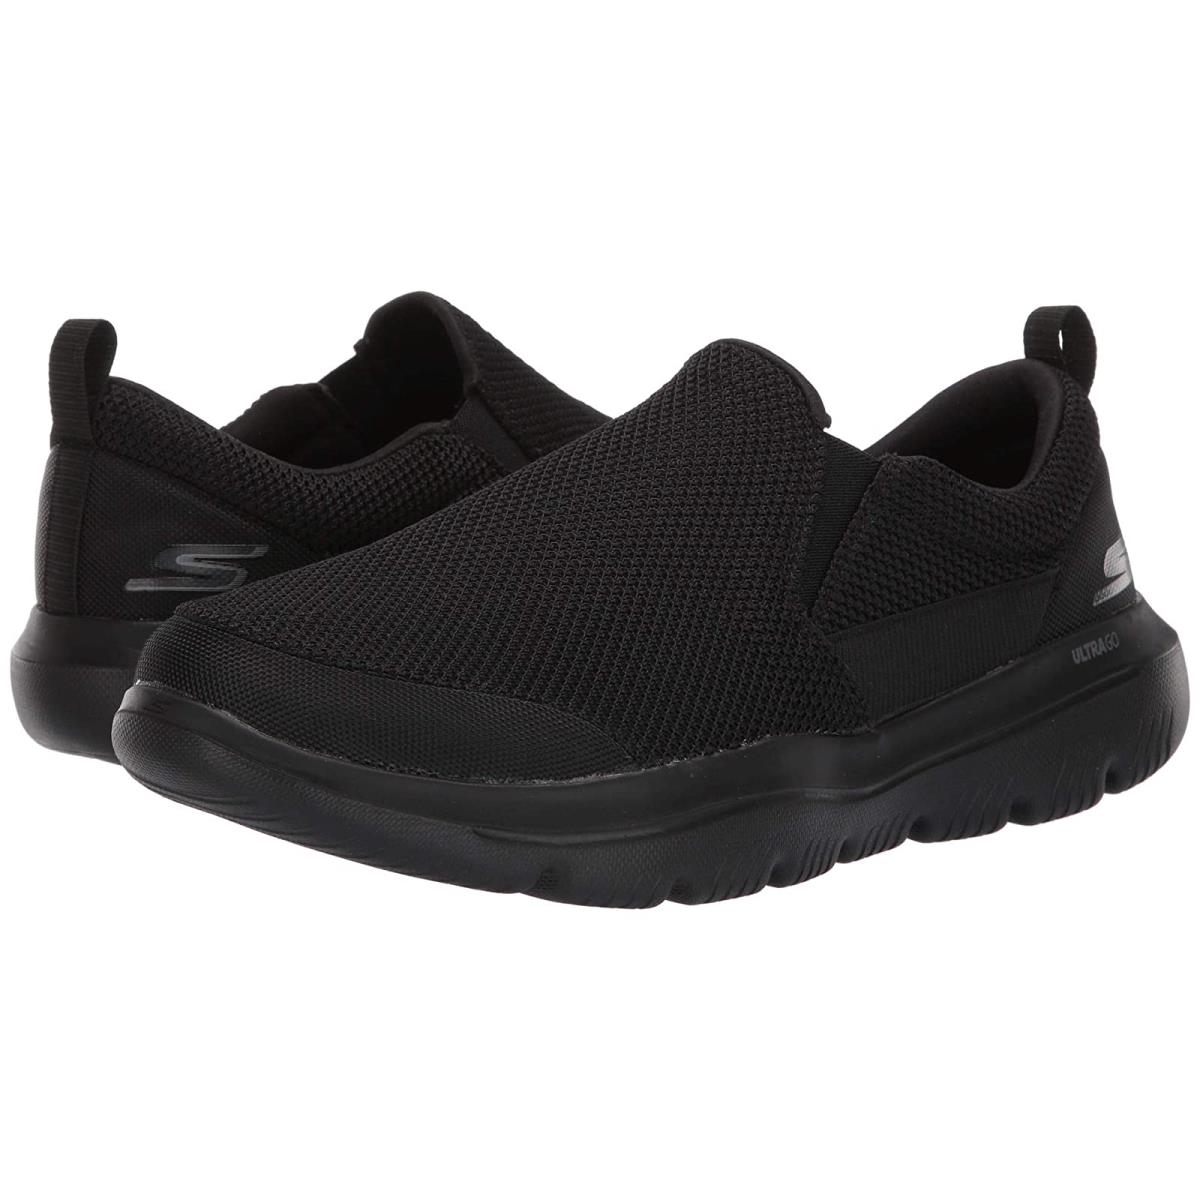 Man`s Shoes Skechers Performance Go Walk Evolution Ultra - Impeccable Black